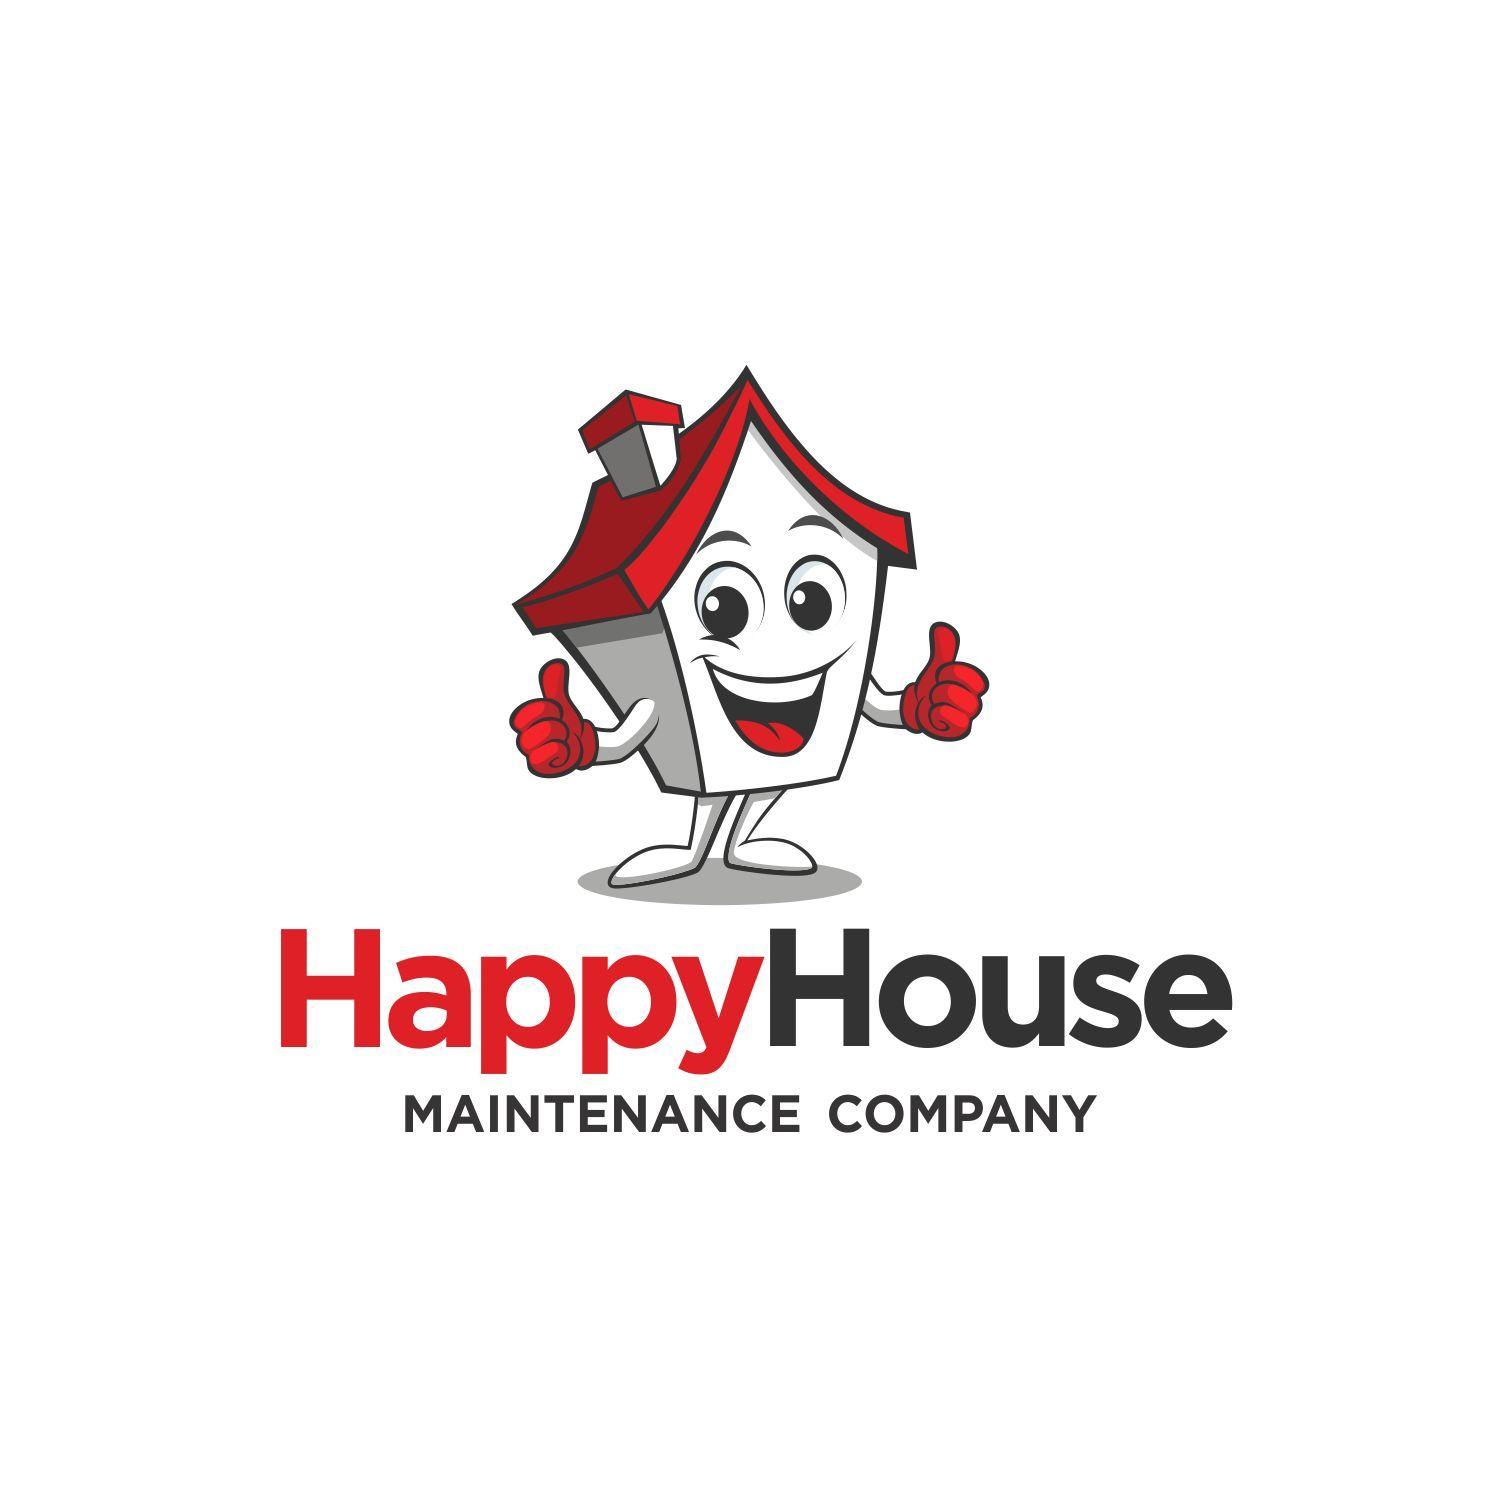 Maintenance Logo - Elegant, Playful, It Company Logo Design for Happy House Maintenance ...